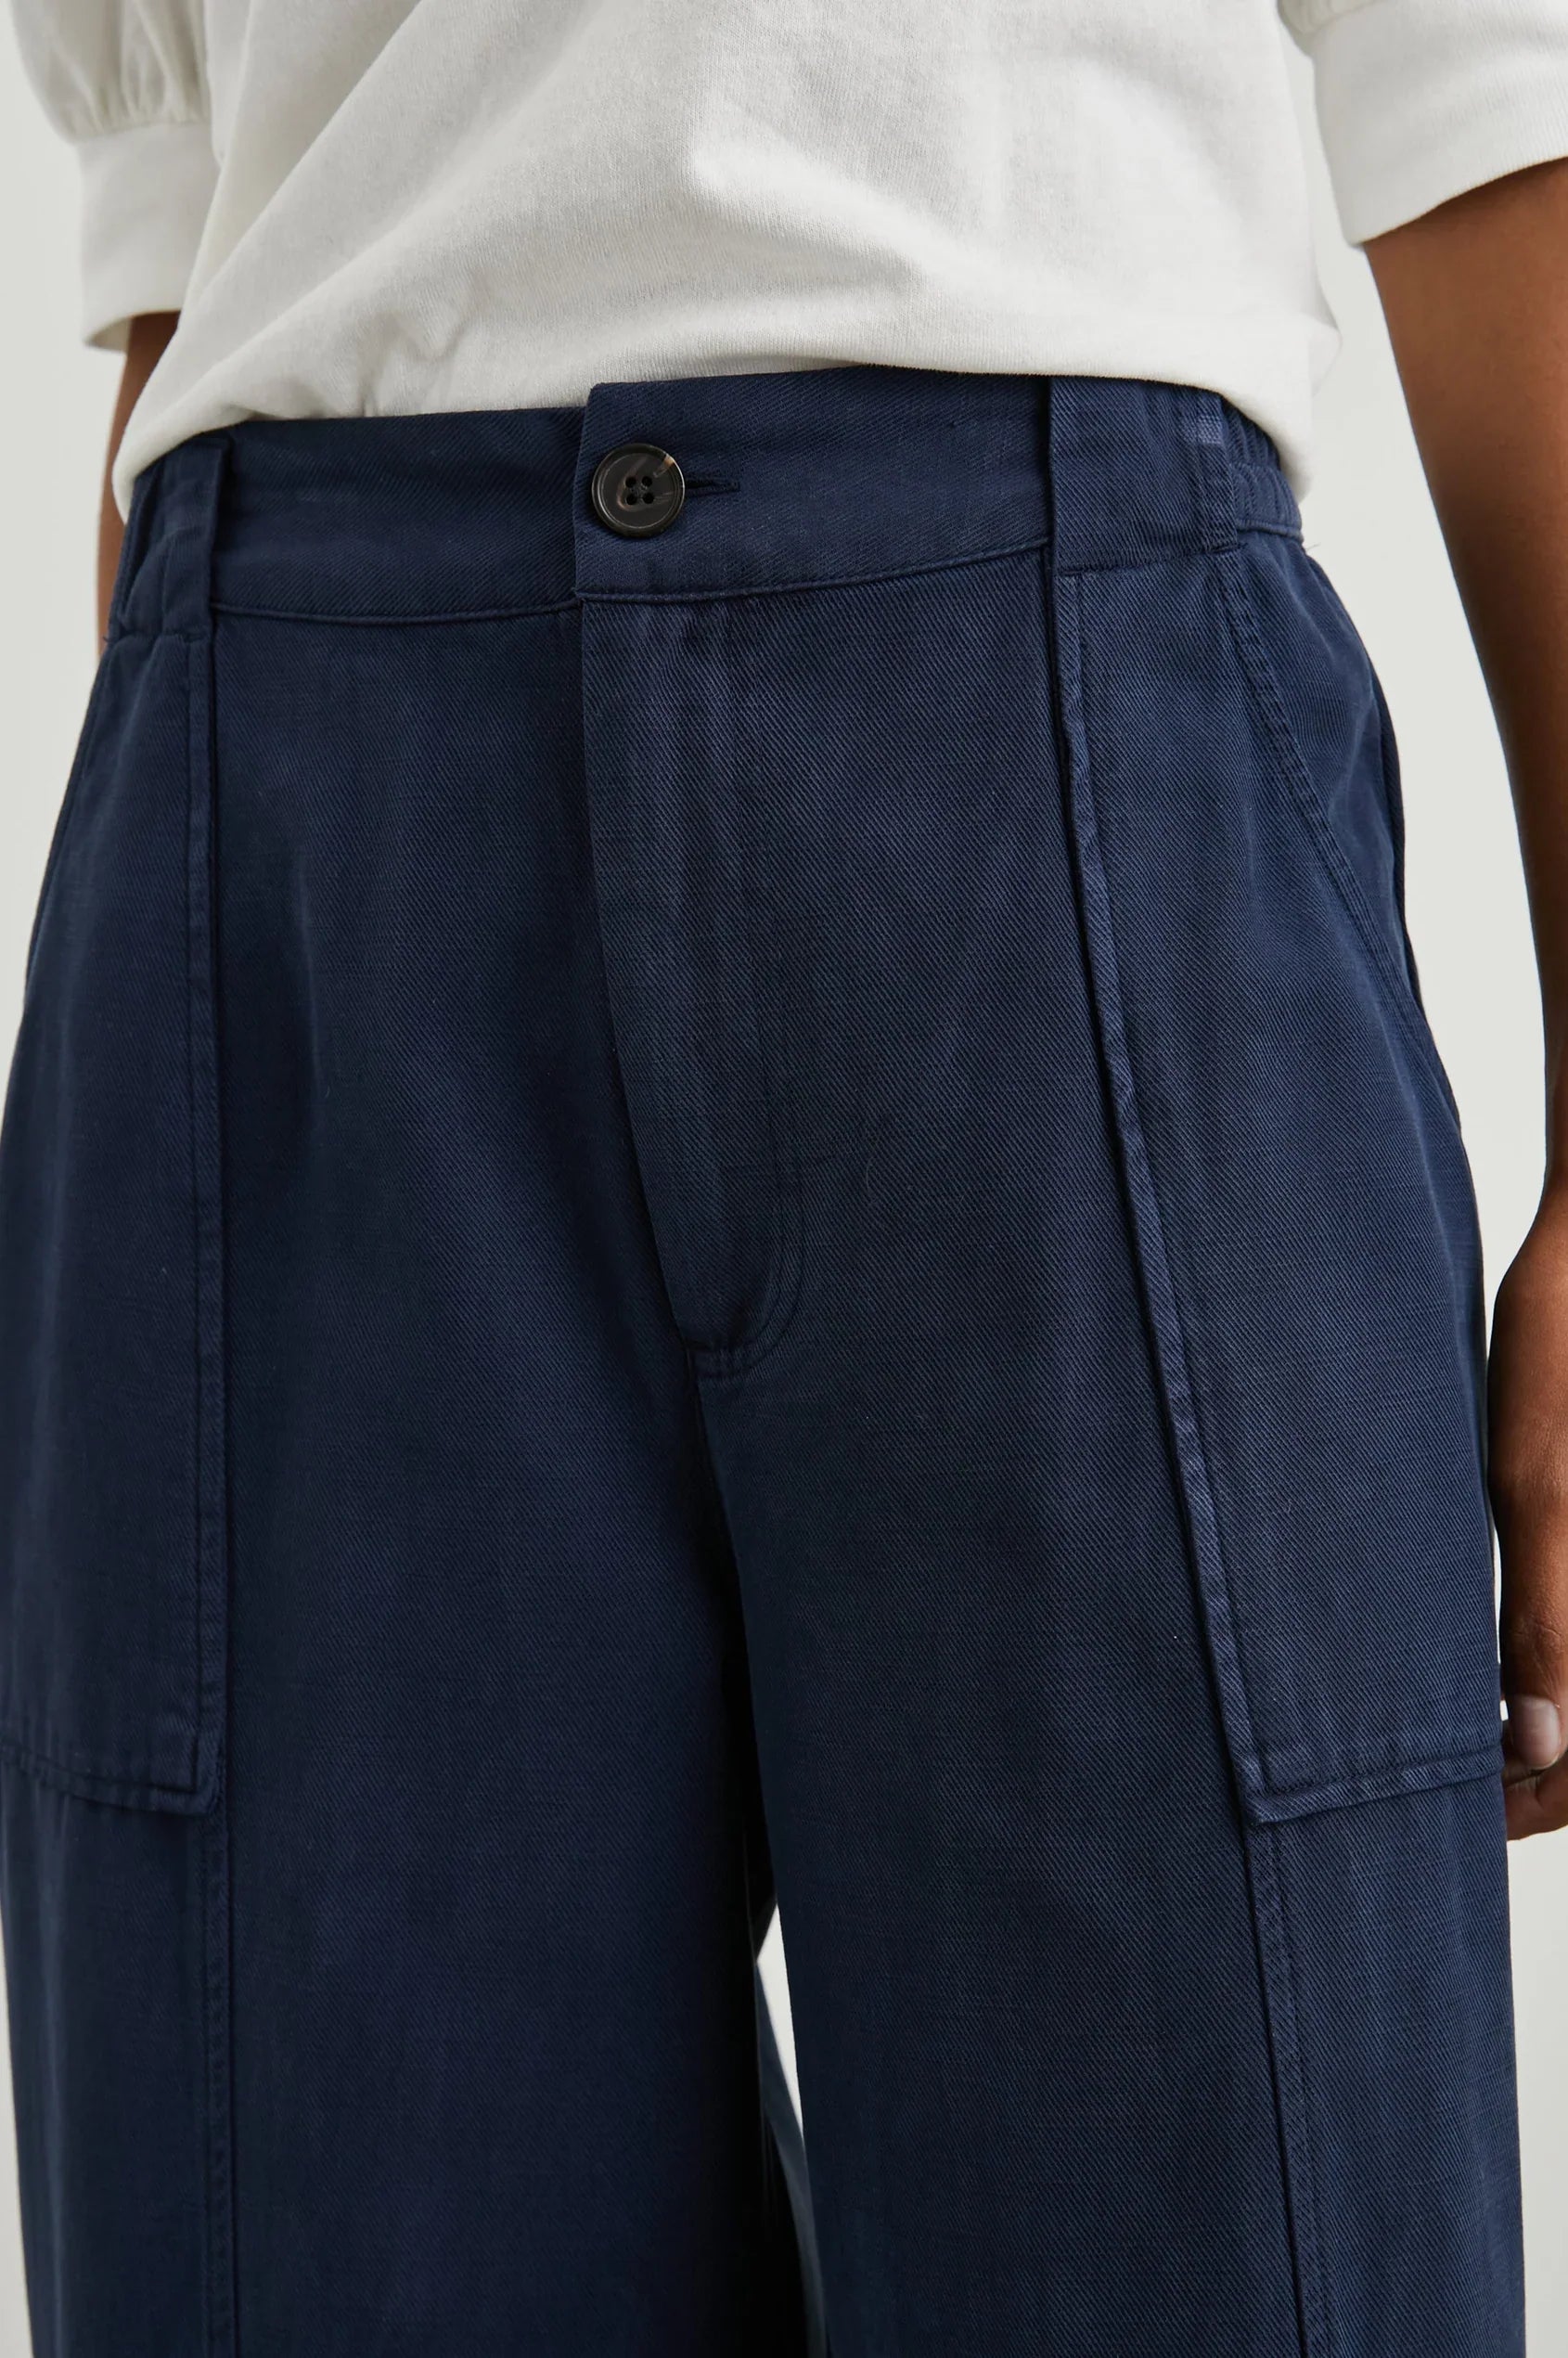 Greer pant - navy Trousers RAILS